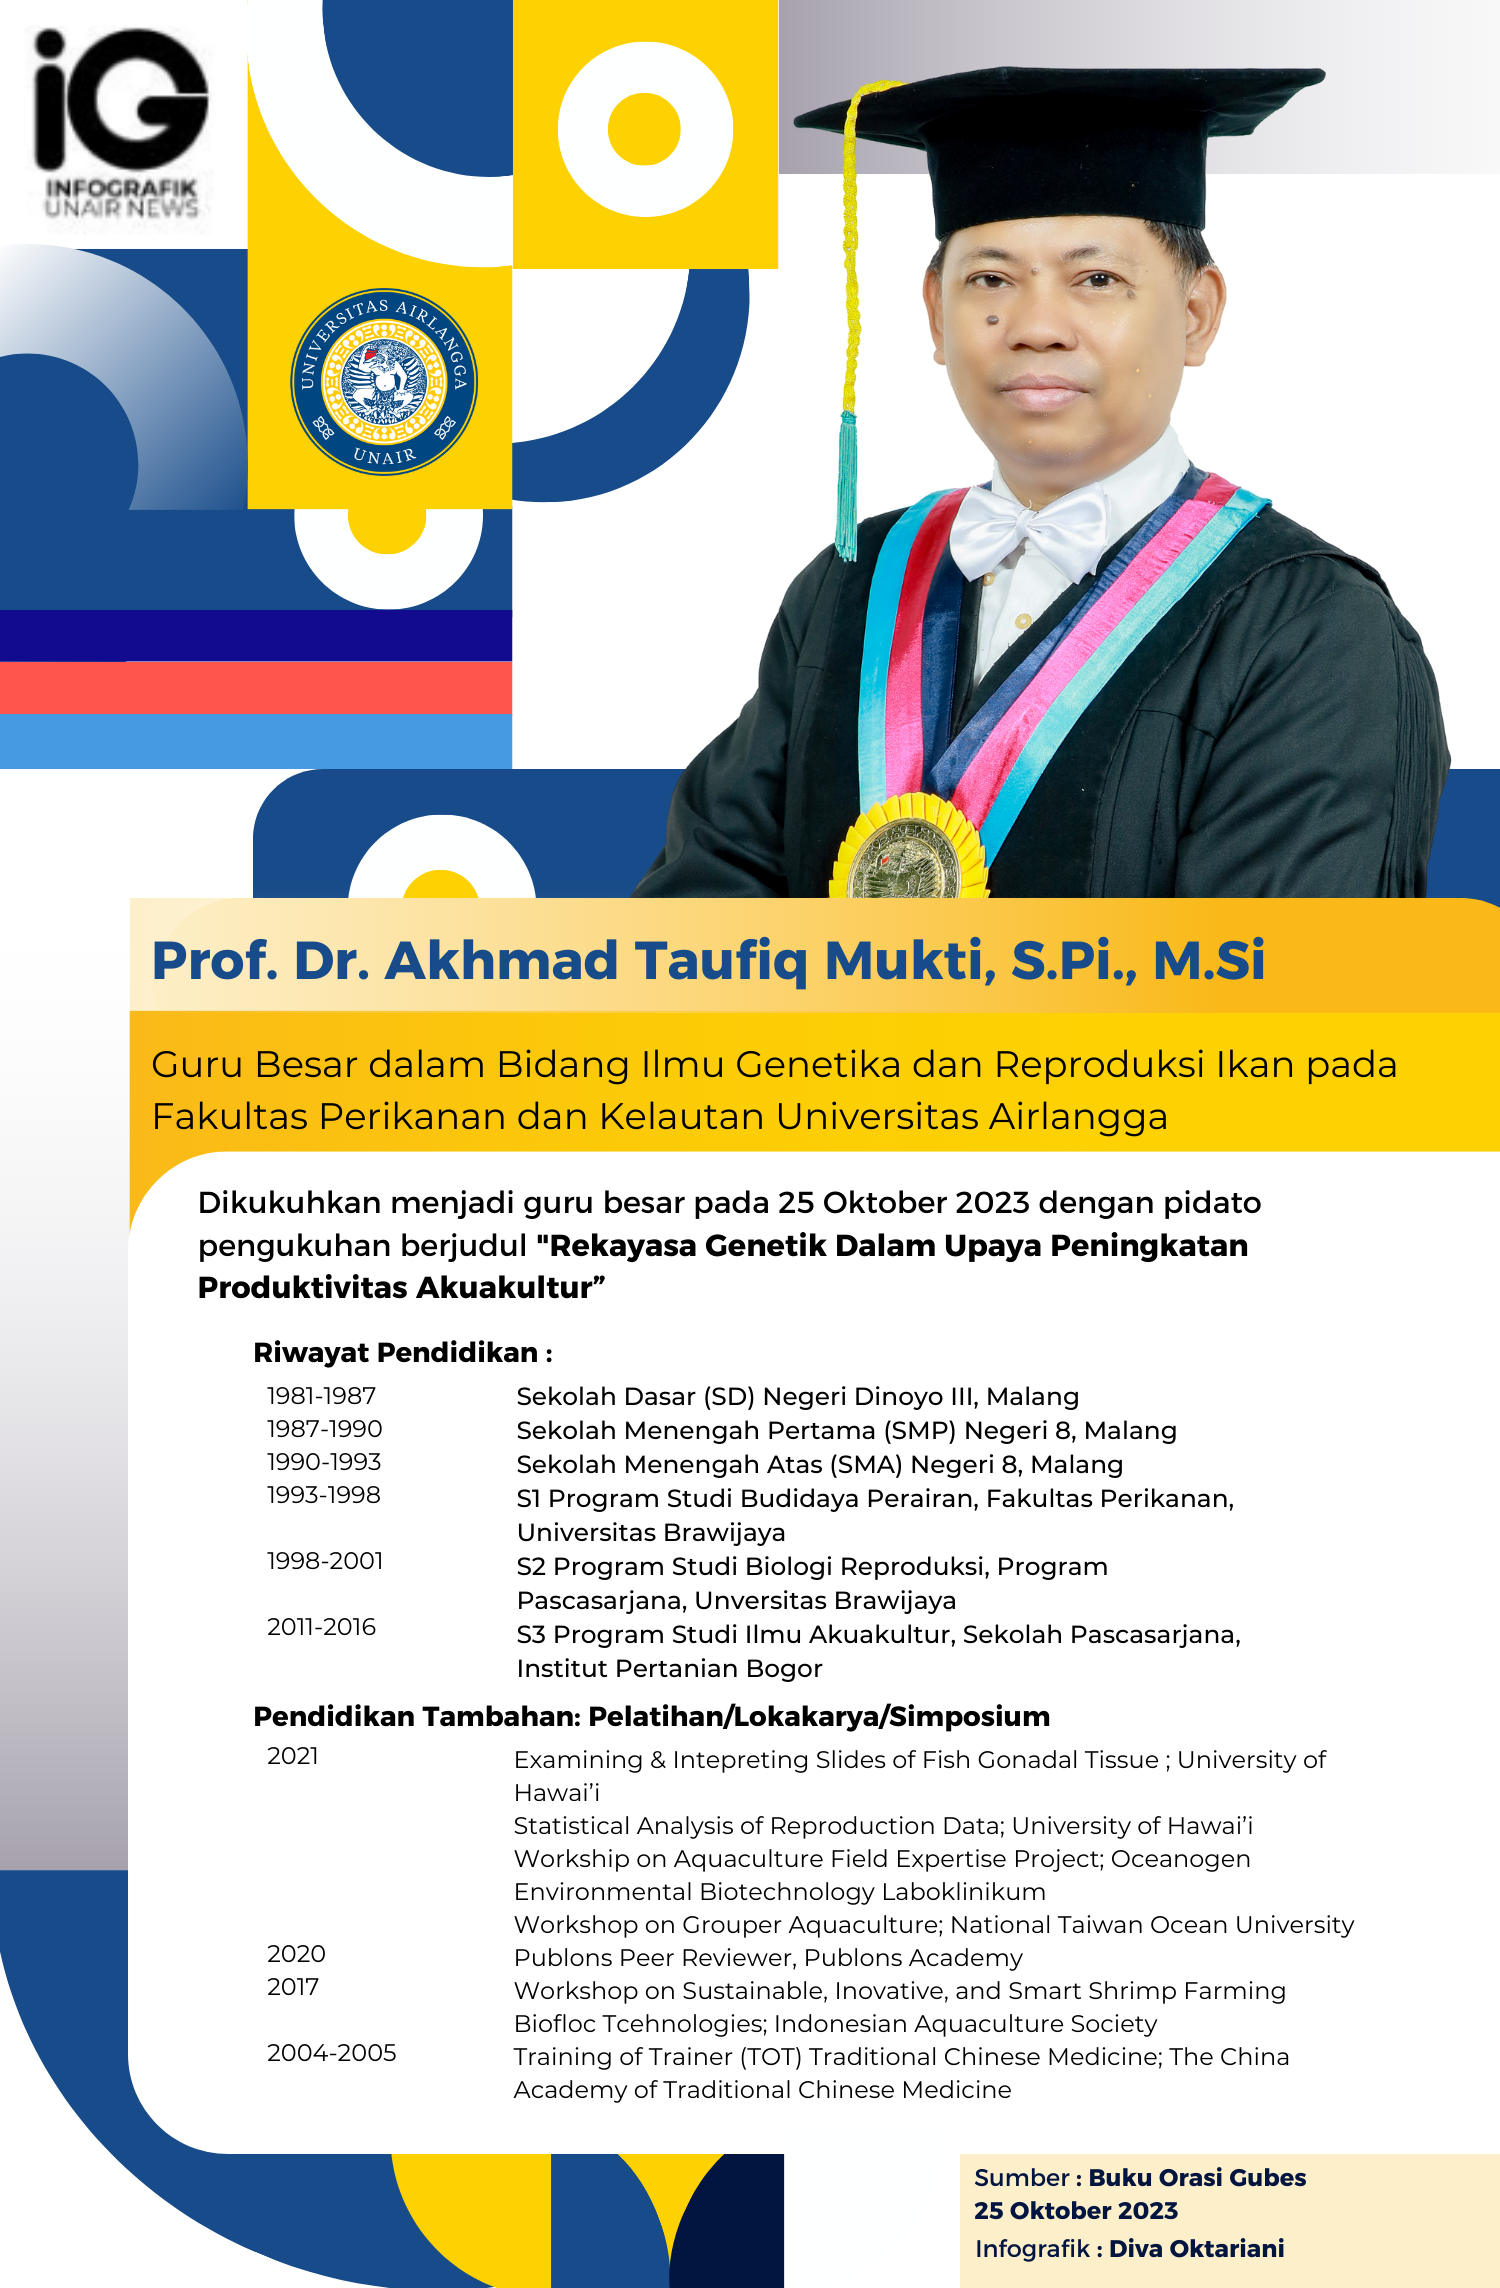 UNAIR NEWS – Pengukuhan guru besar Prof. Dr. Akhmad Taufiq Mukti, S.Pi., M.Si pada 25 Oktober 2023. Beliau menyampaikan pidato pengukuhan yang berjudul “Rekayasa Genetik Dalam Upaya Peningkatan Produktivitas Akuakultur”.